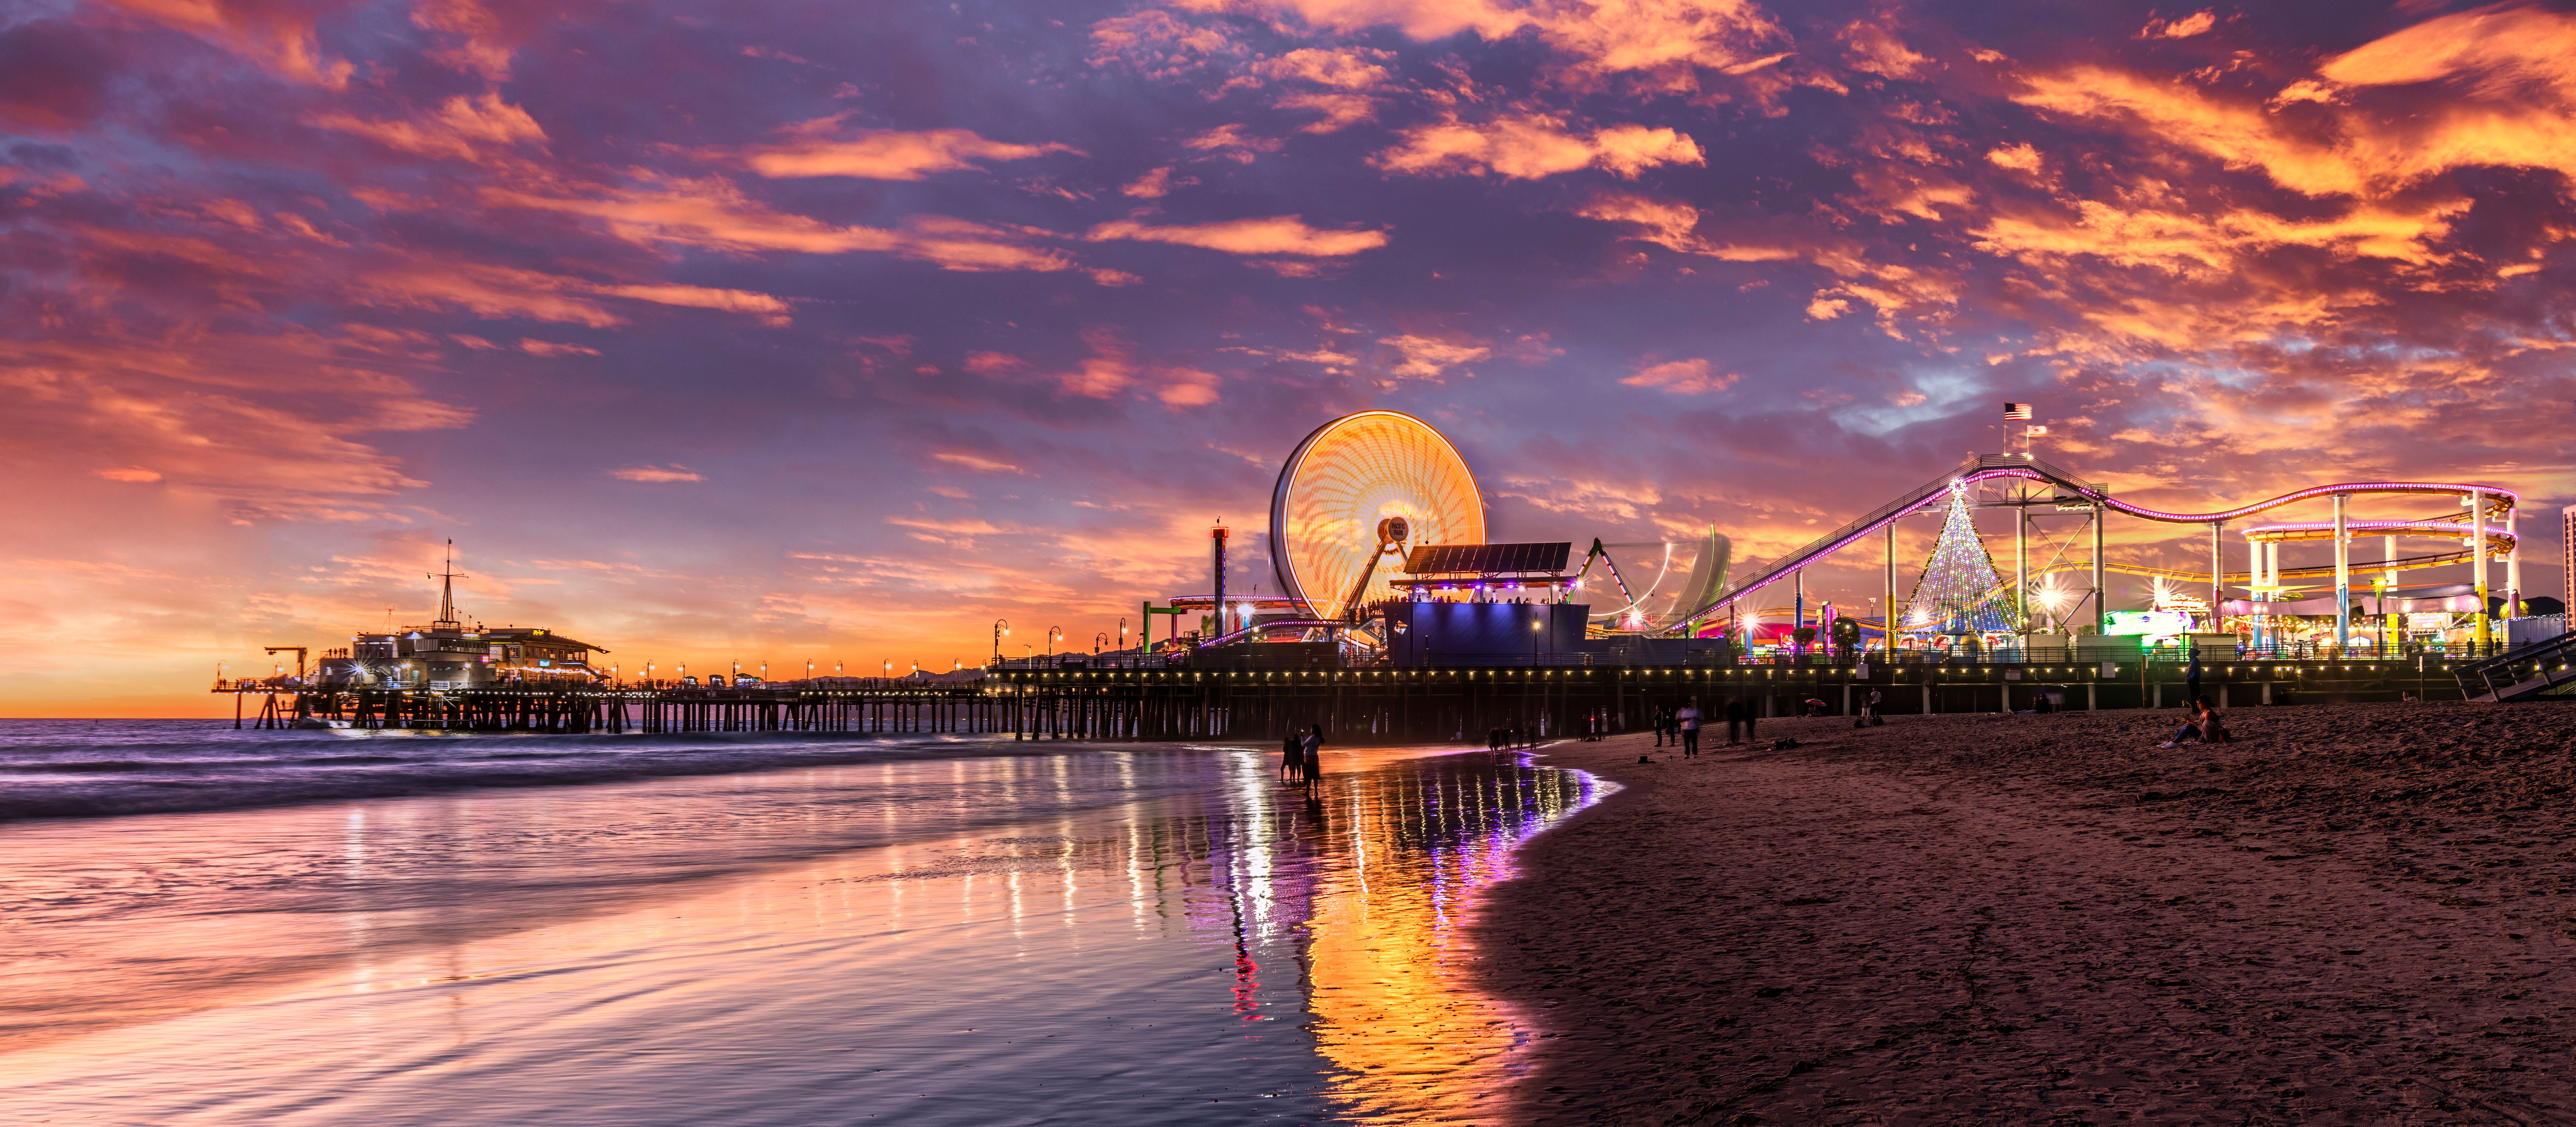 California's Santa Monica Pier and beach lit up as the sun sets